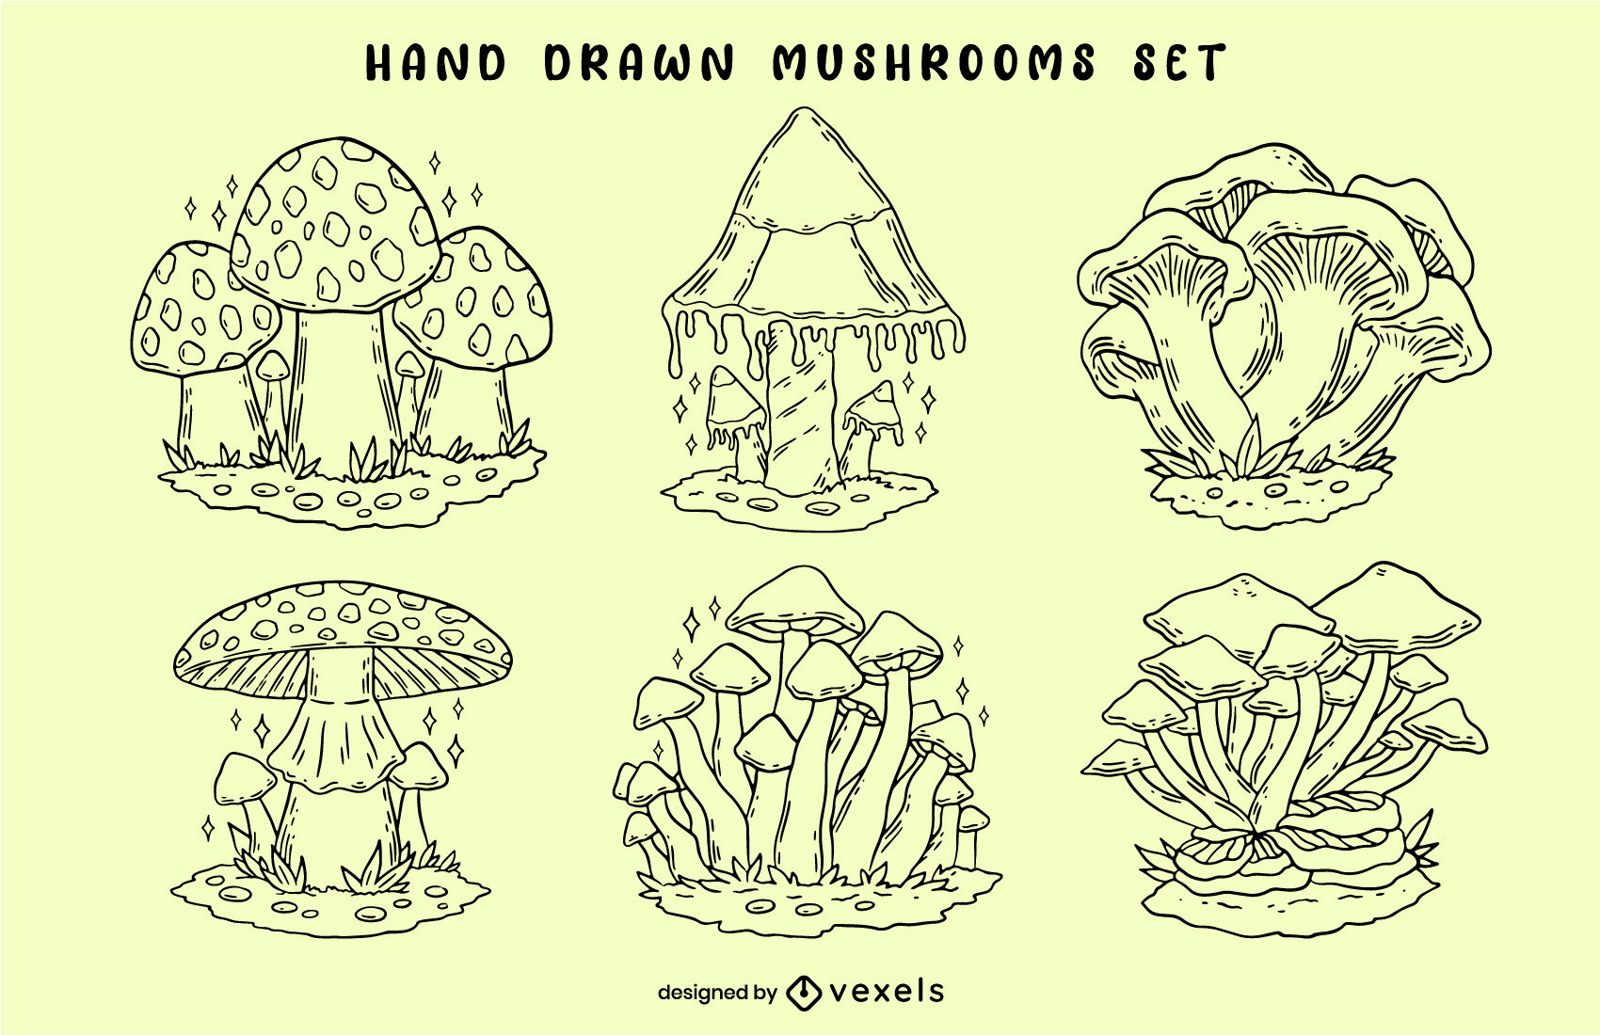 Mushrooms in nature hand drawn set